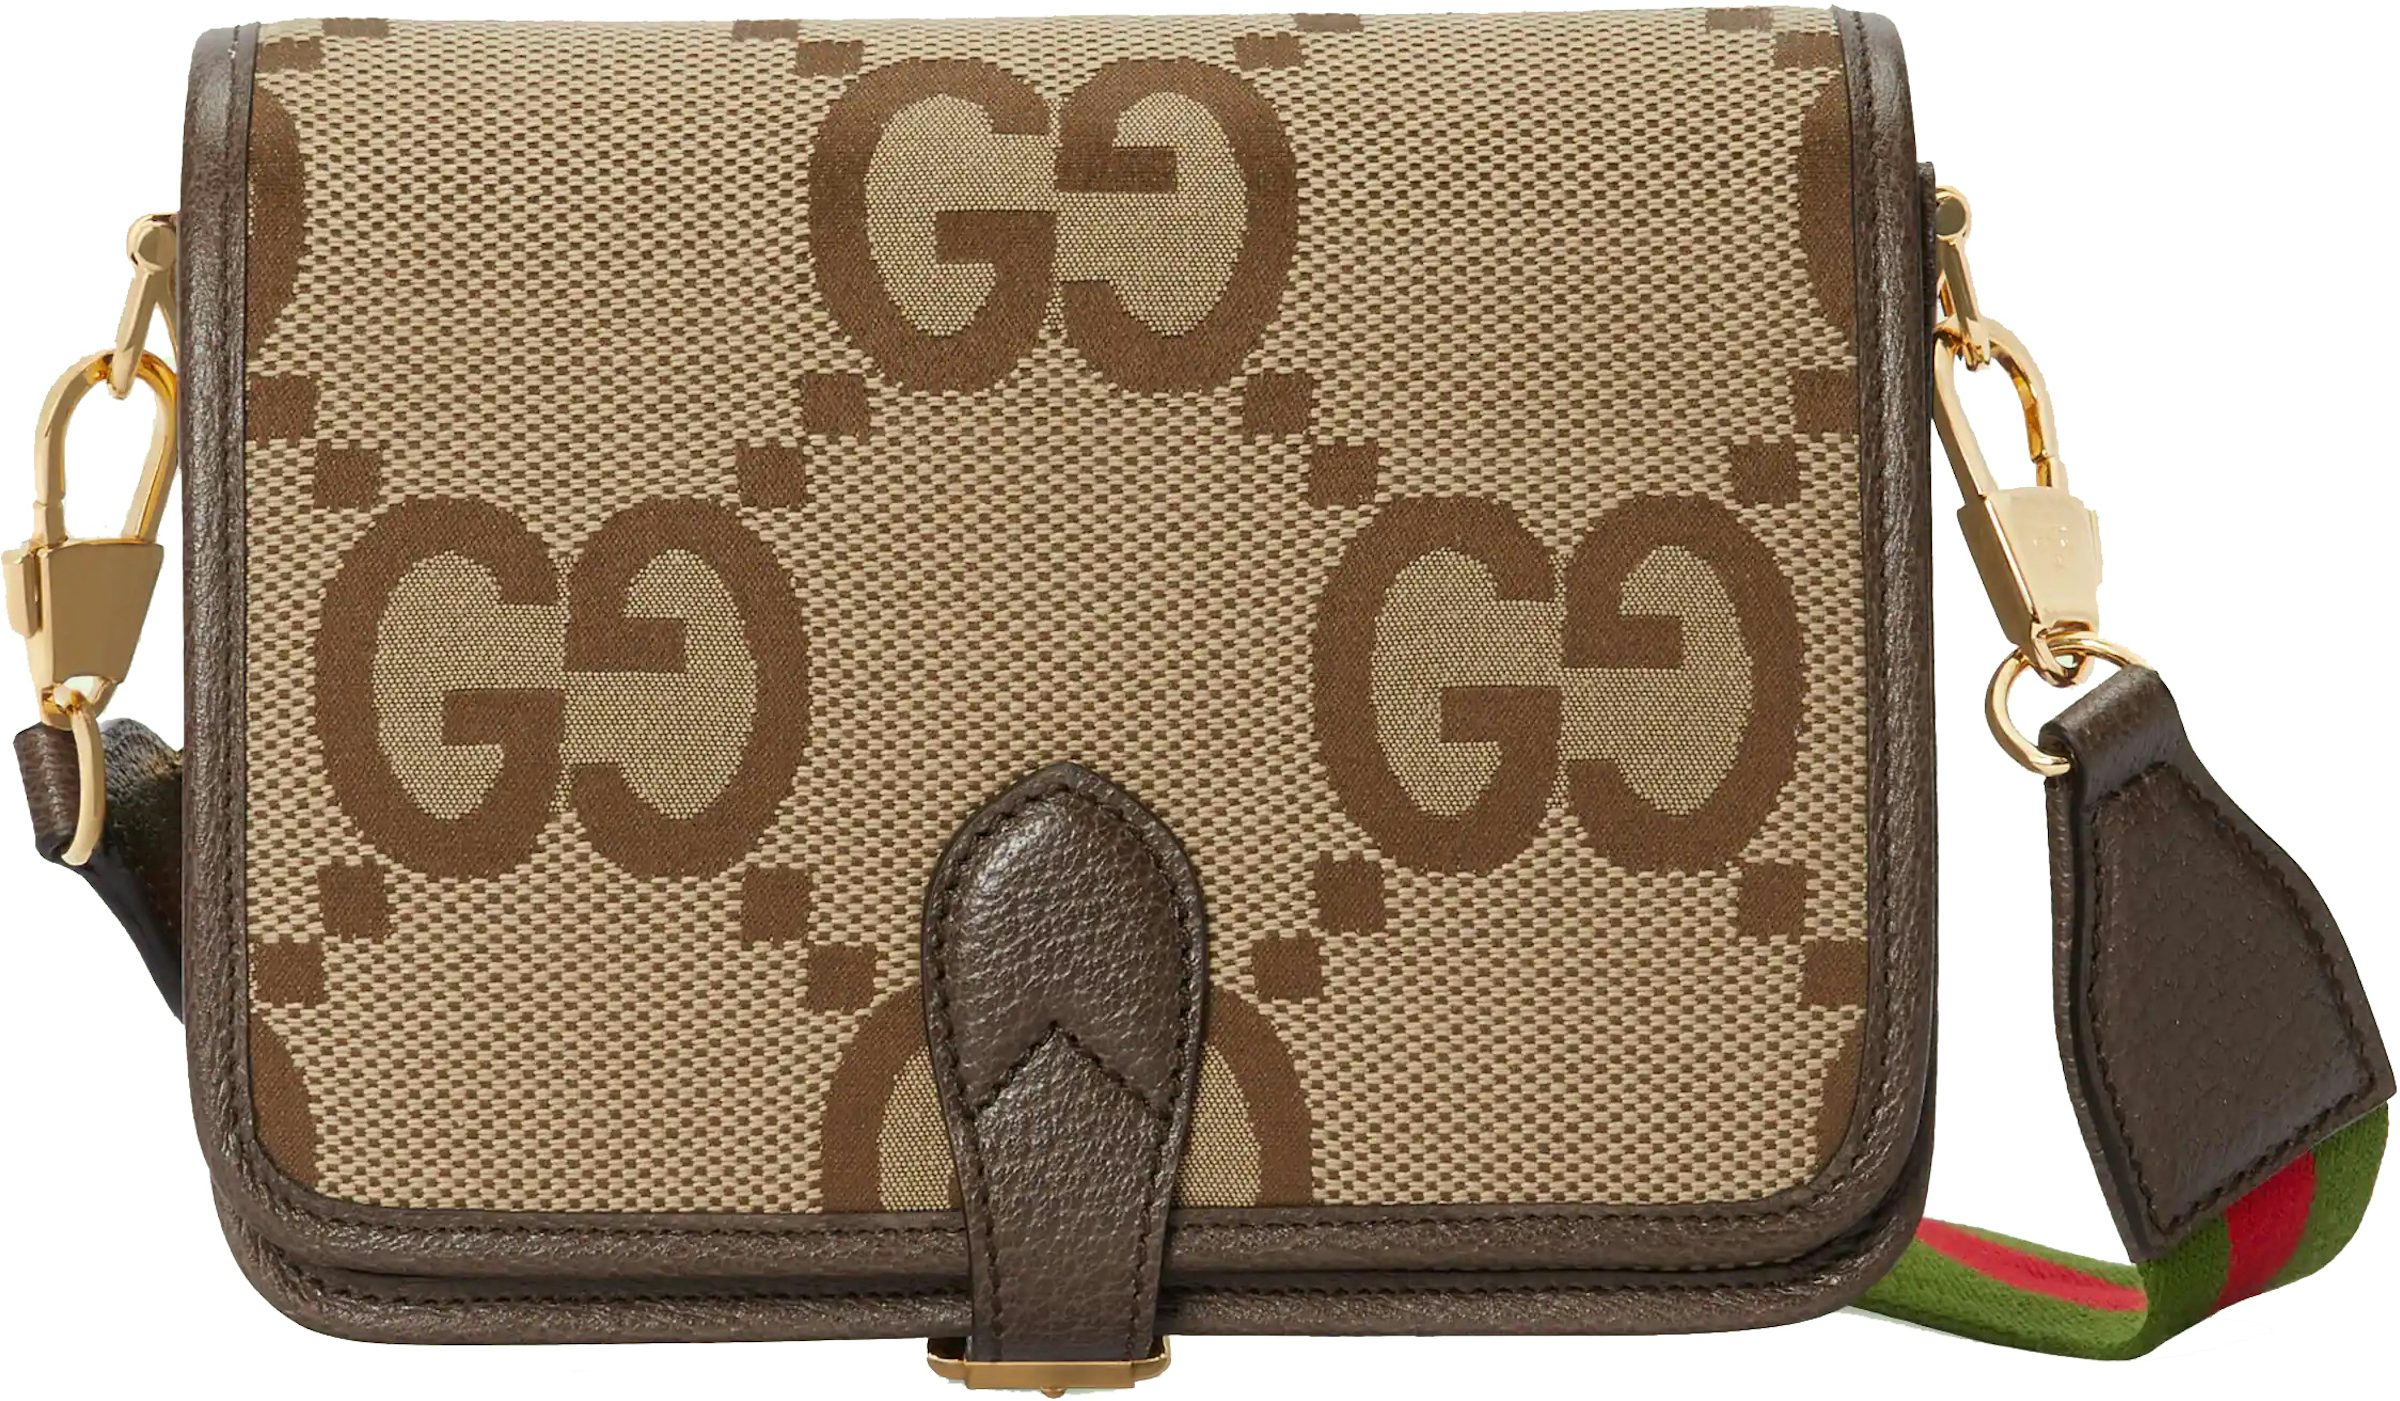 Jumbo GG large duffle bag in camel and ebony GG canvas